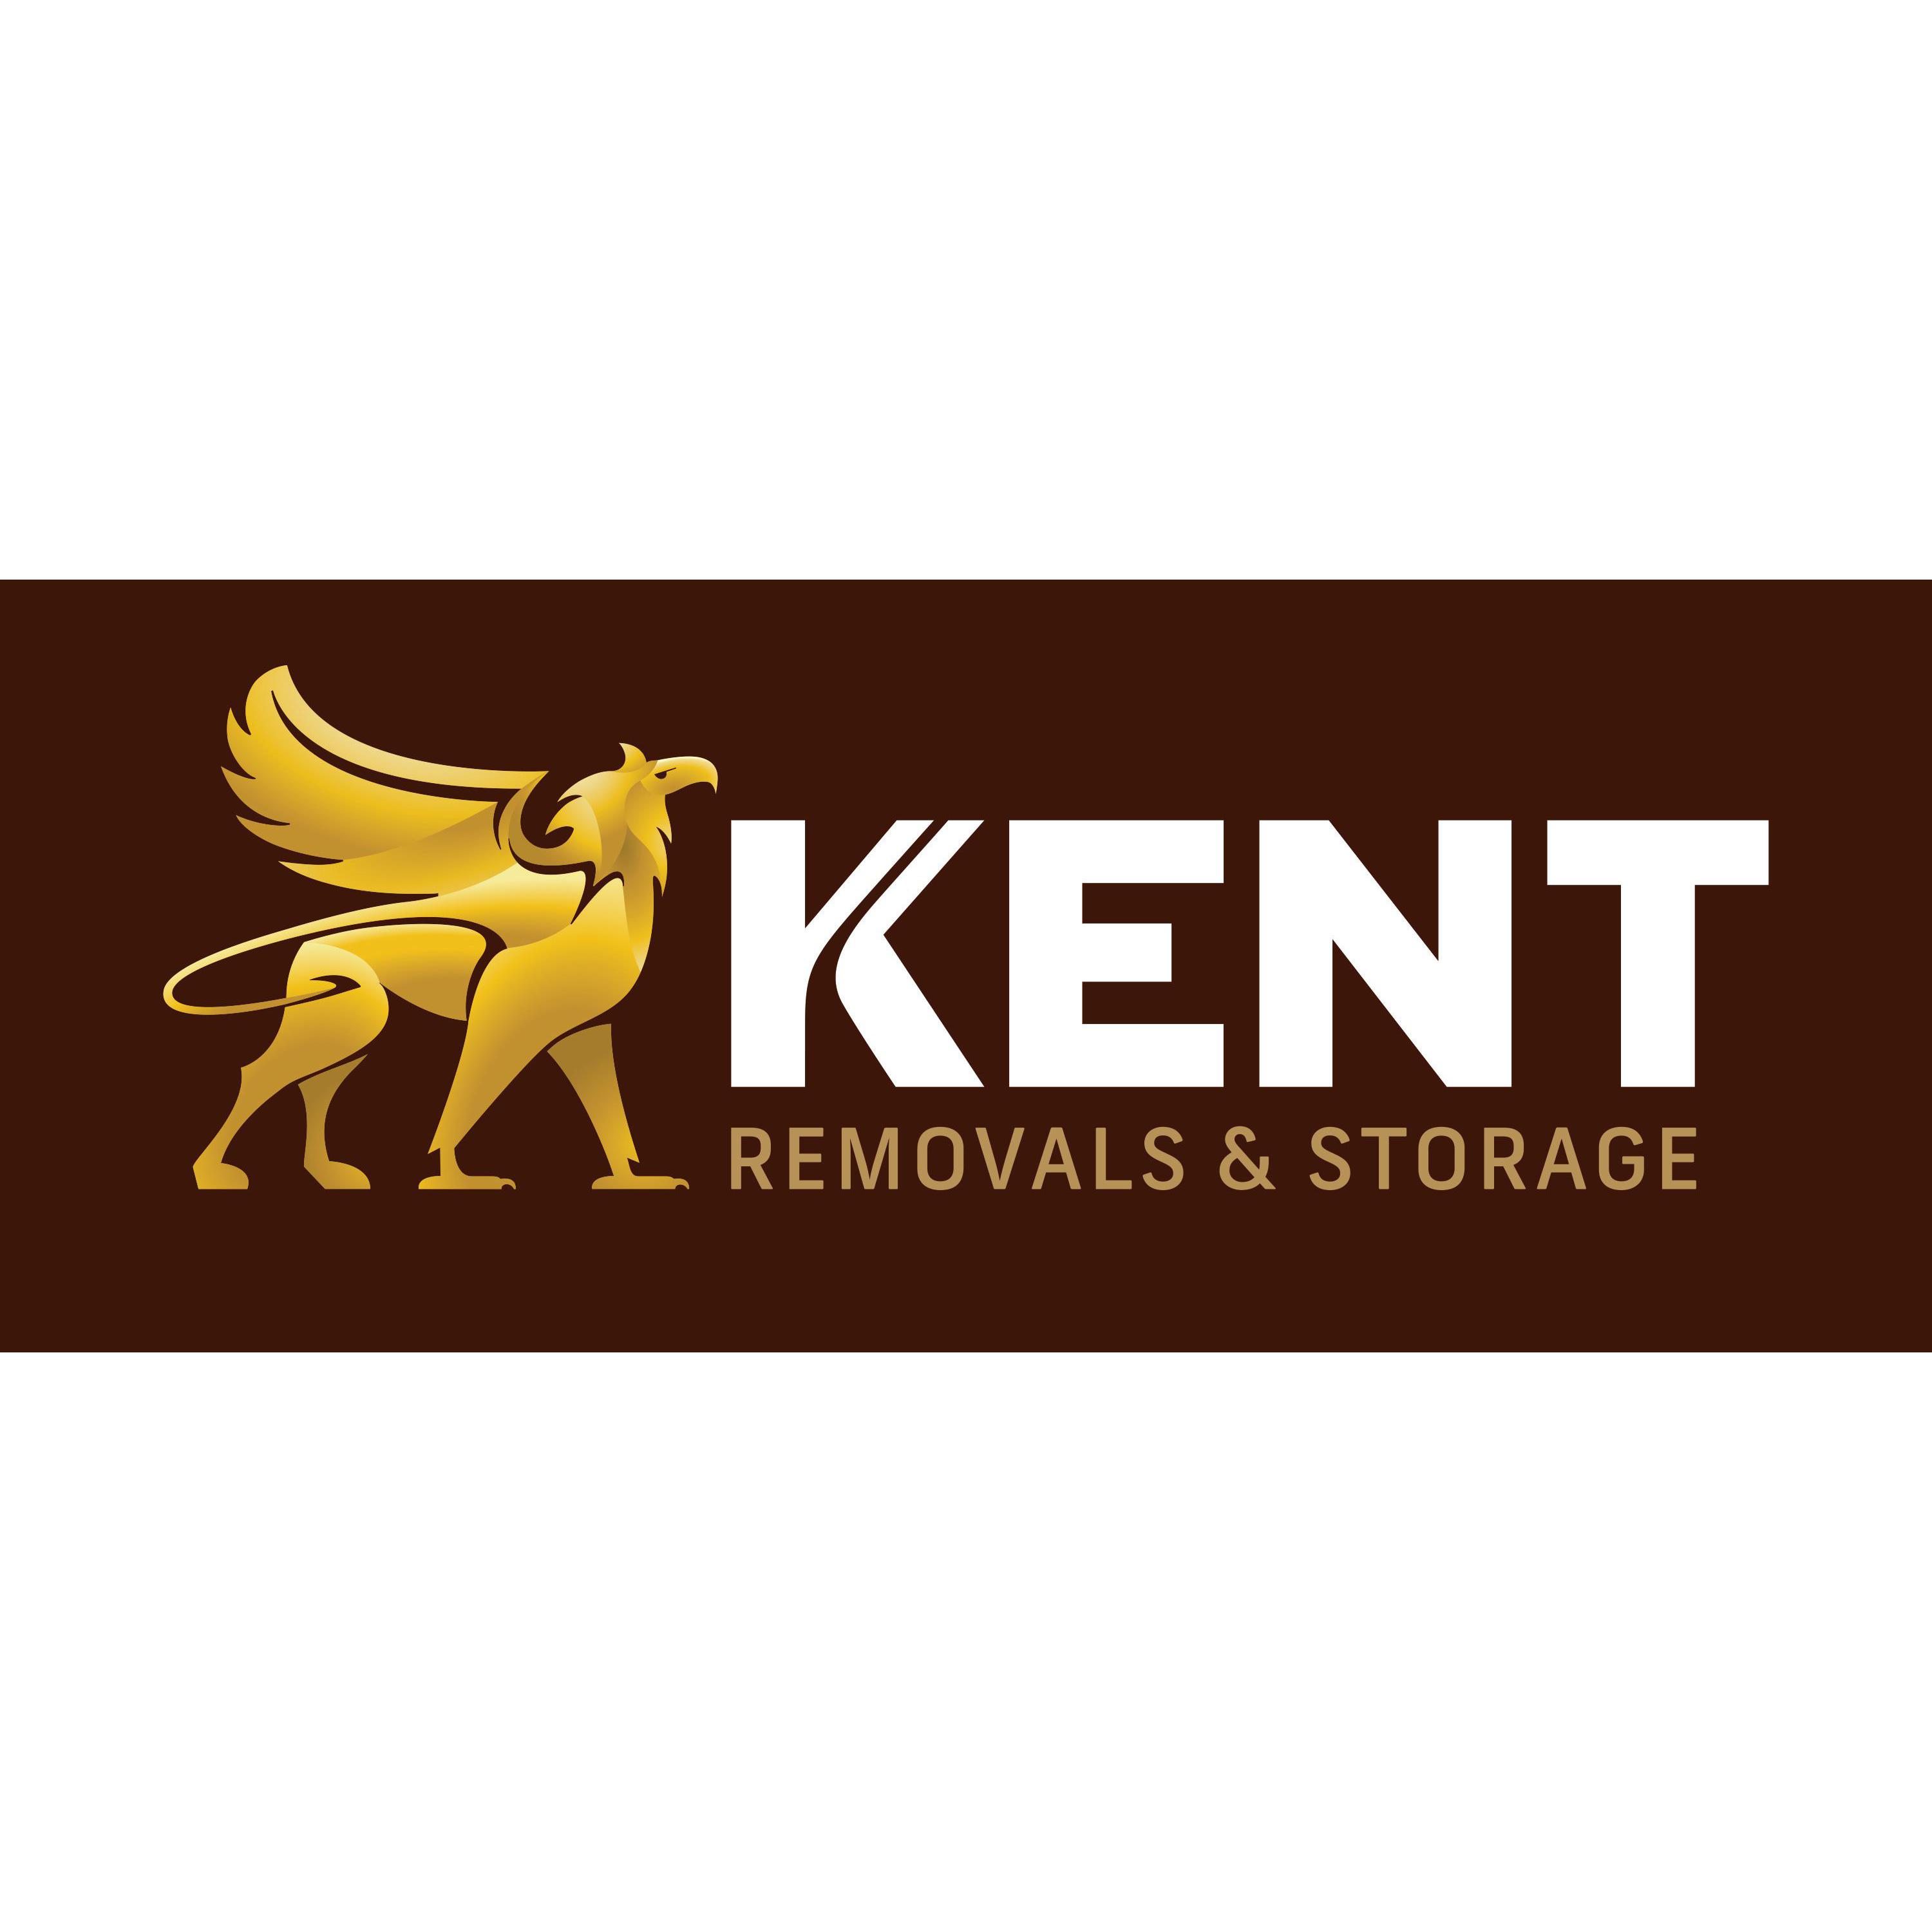 Kent Removals & Storage - Tomago, NSW 2322 - (13) 0065 8263 | ShowMeLocal.com